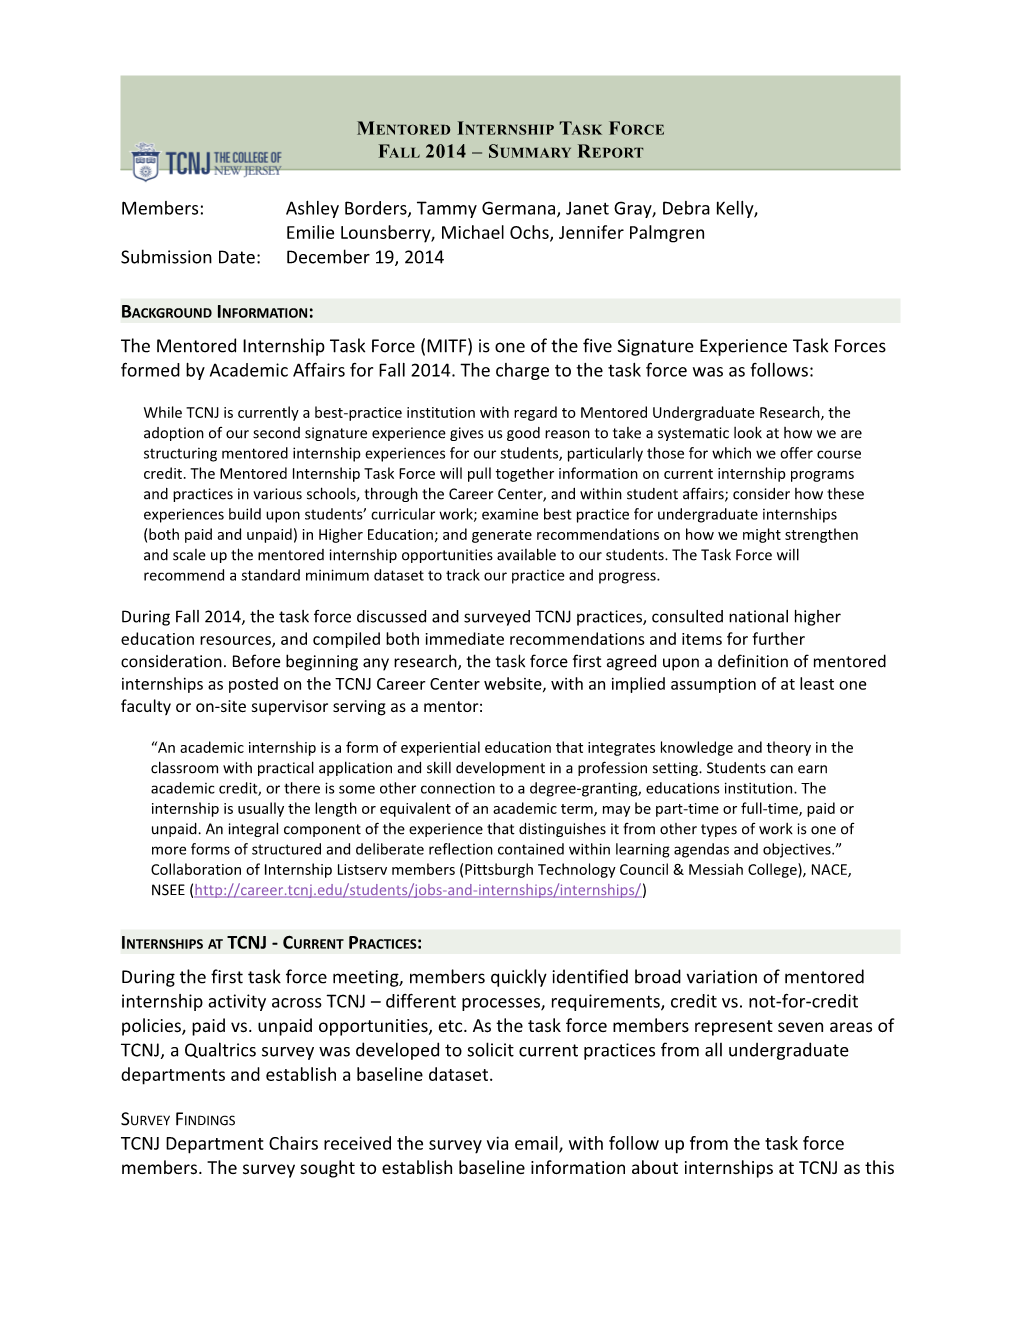 Mentored Internship Task Force Fall 2014 Summary Report